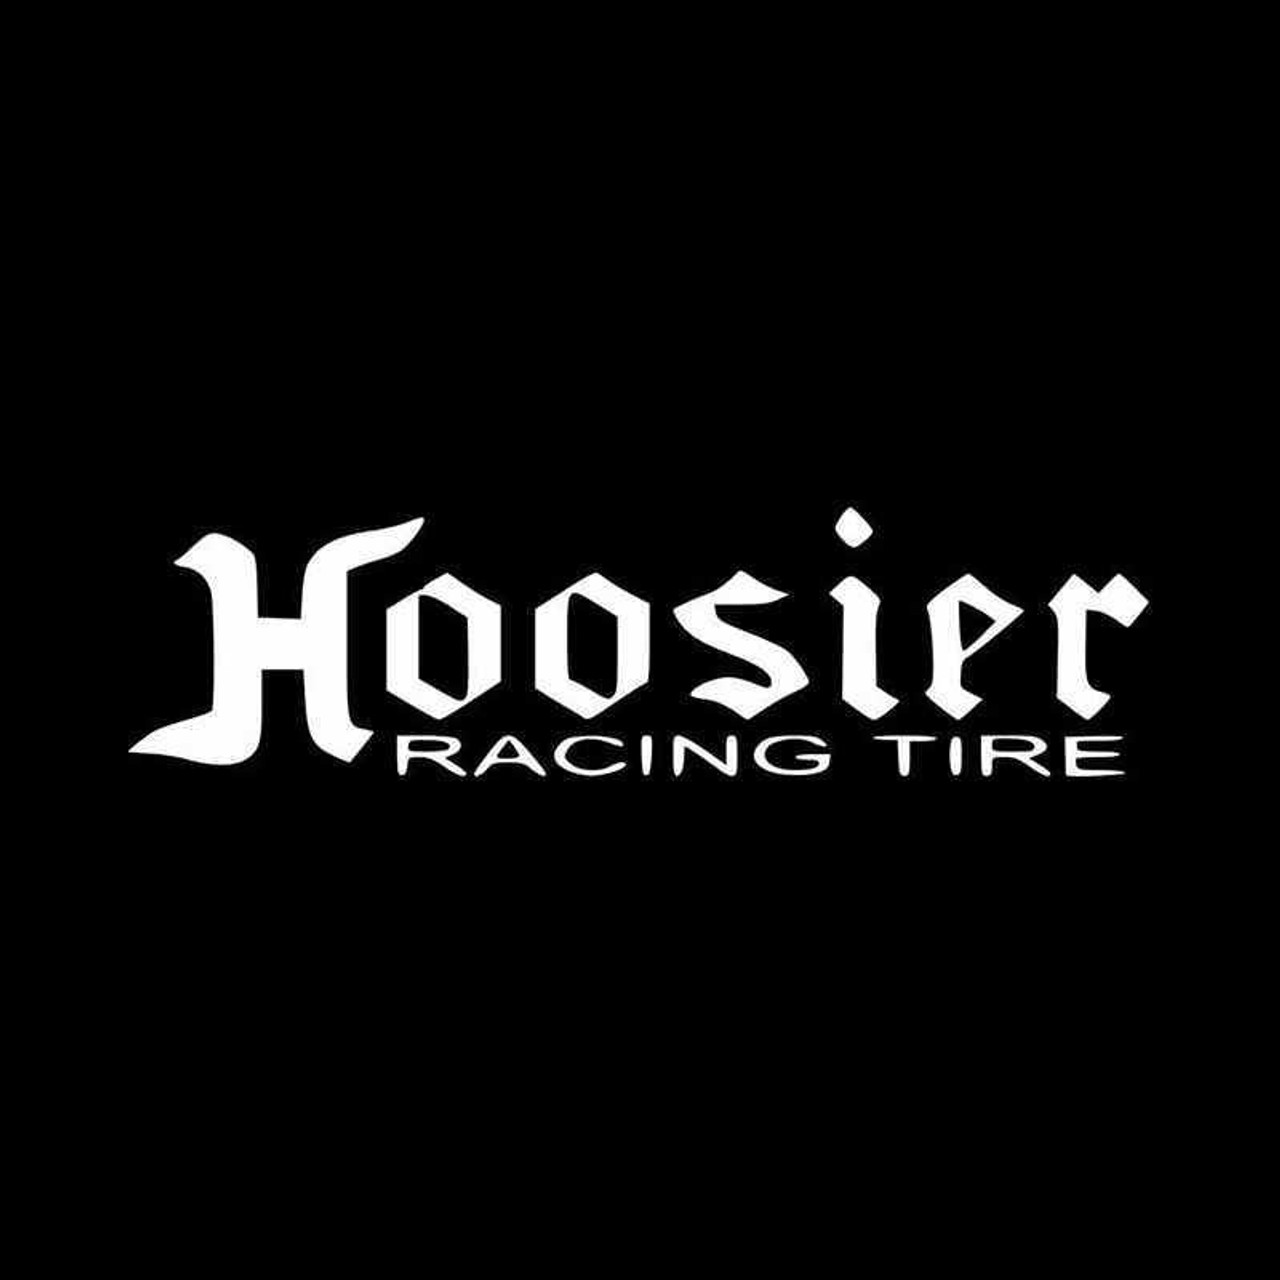 Hoosier Racing Tire Logo Car Vinyl Decal Sticker